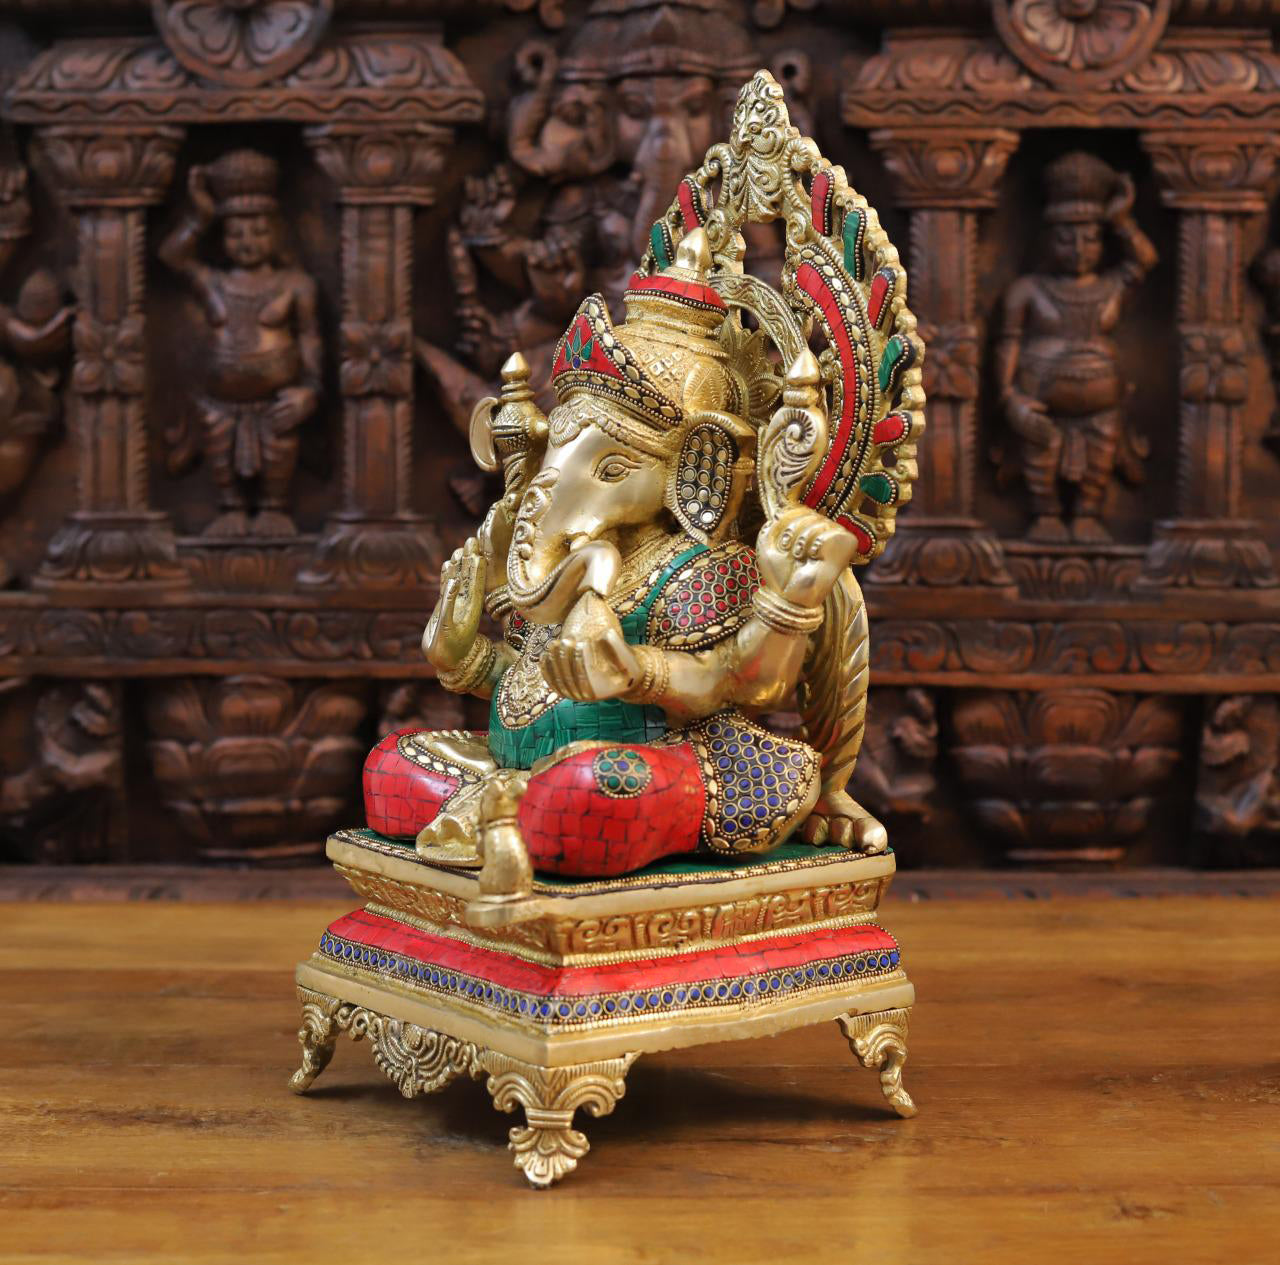 Buy KRISHNAGALLERY1 Polyresin Ganesh Ji Murti Ganesha Statue for Homee  Pooja Room Gift Showpiece Idol 7 Inch Online at Low Prices in India -  Amazon.in